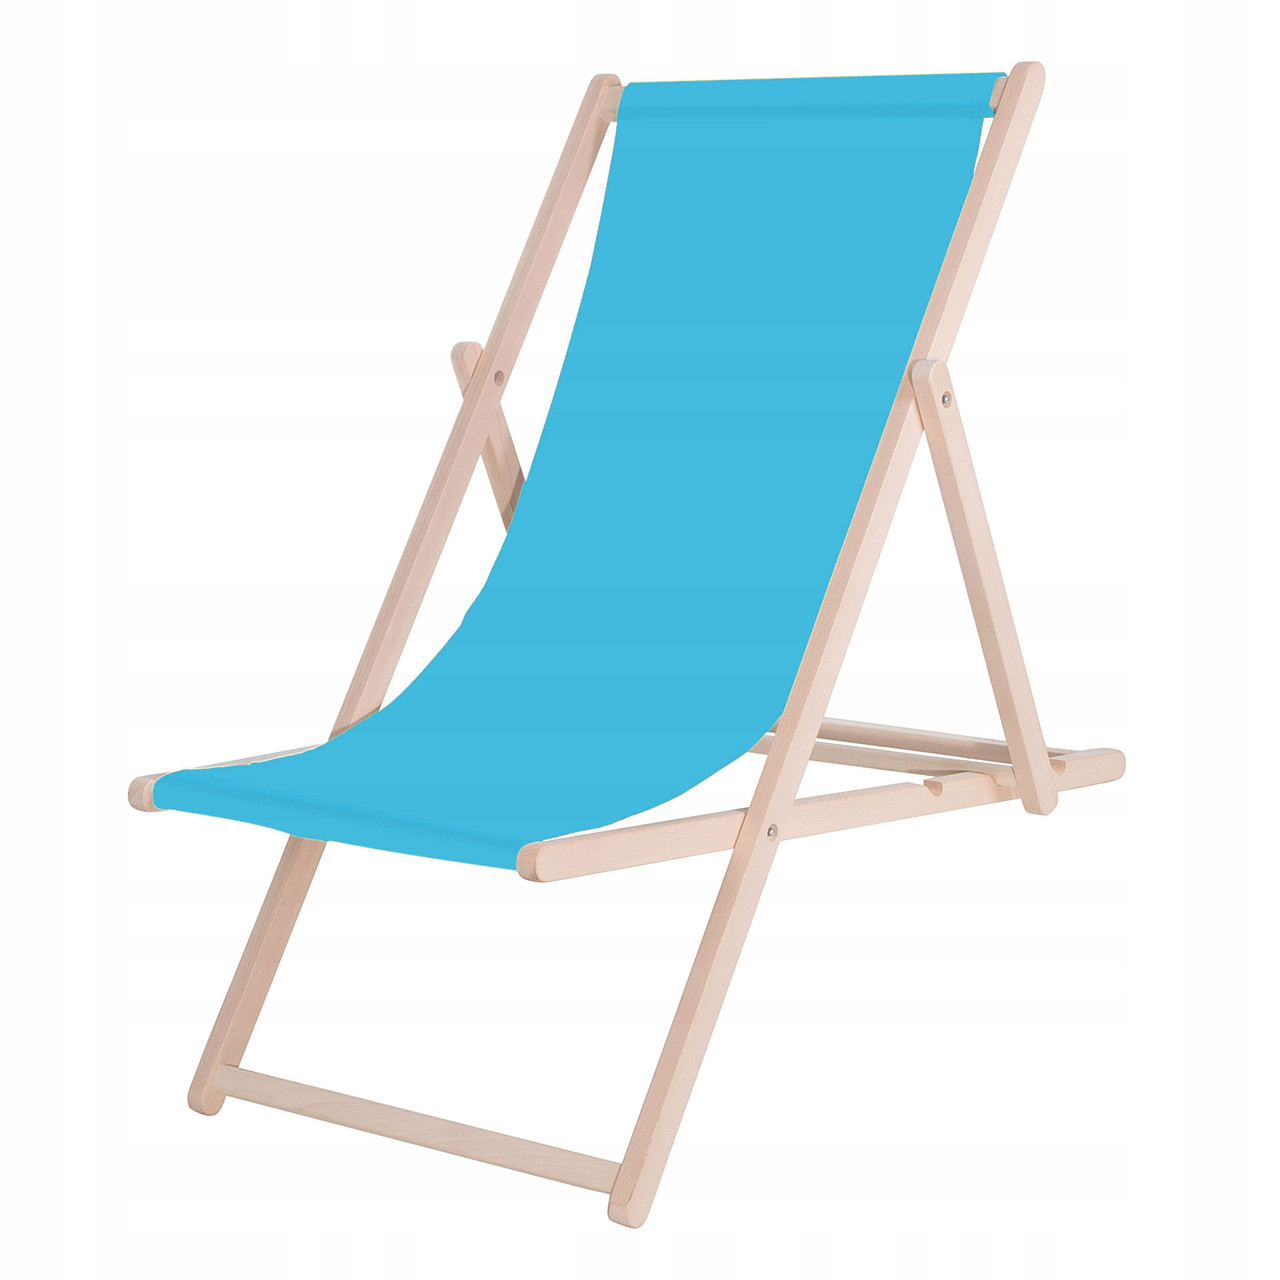 Шезлонг (крісло-лежак) дерев'яний для пляжу, тераси та саду Springos BLUE